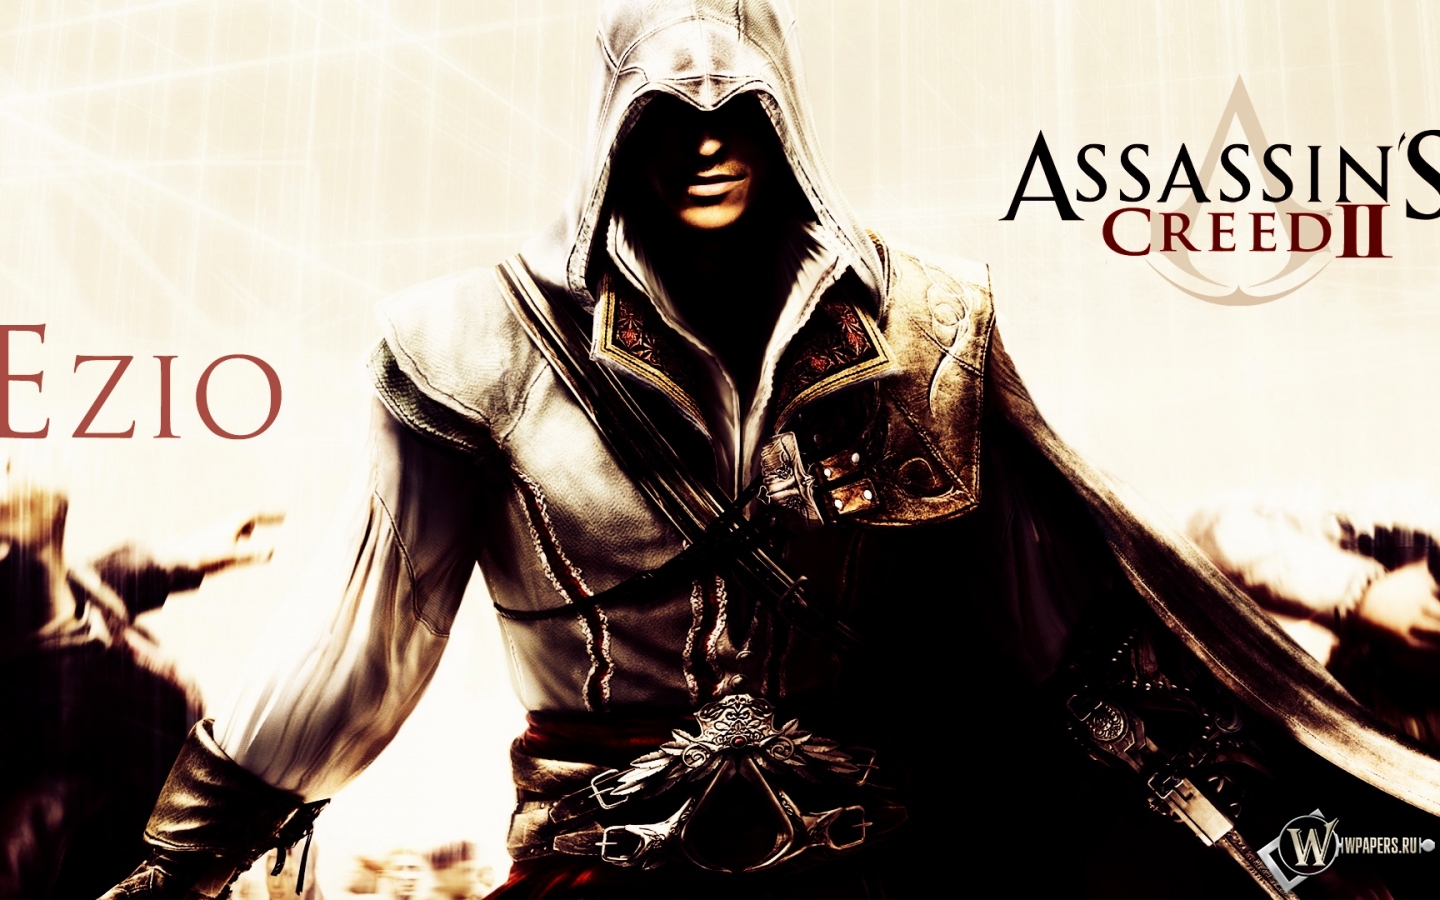 Assassins creed 1440x900